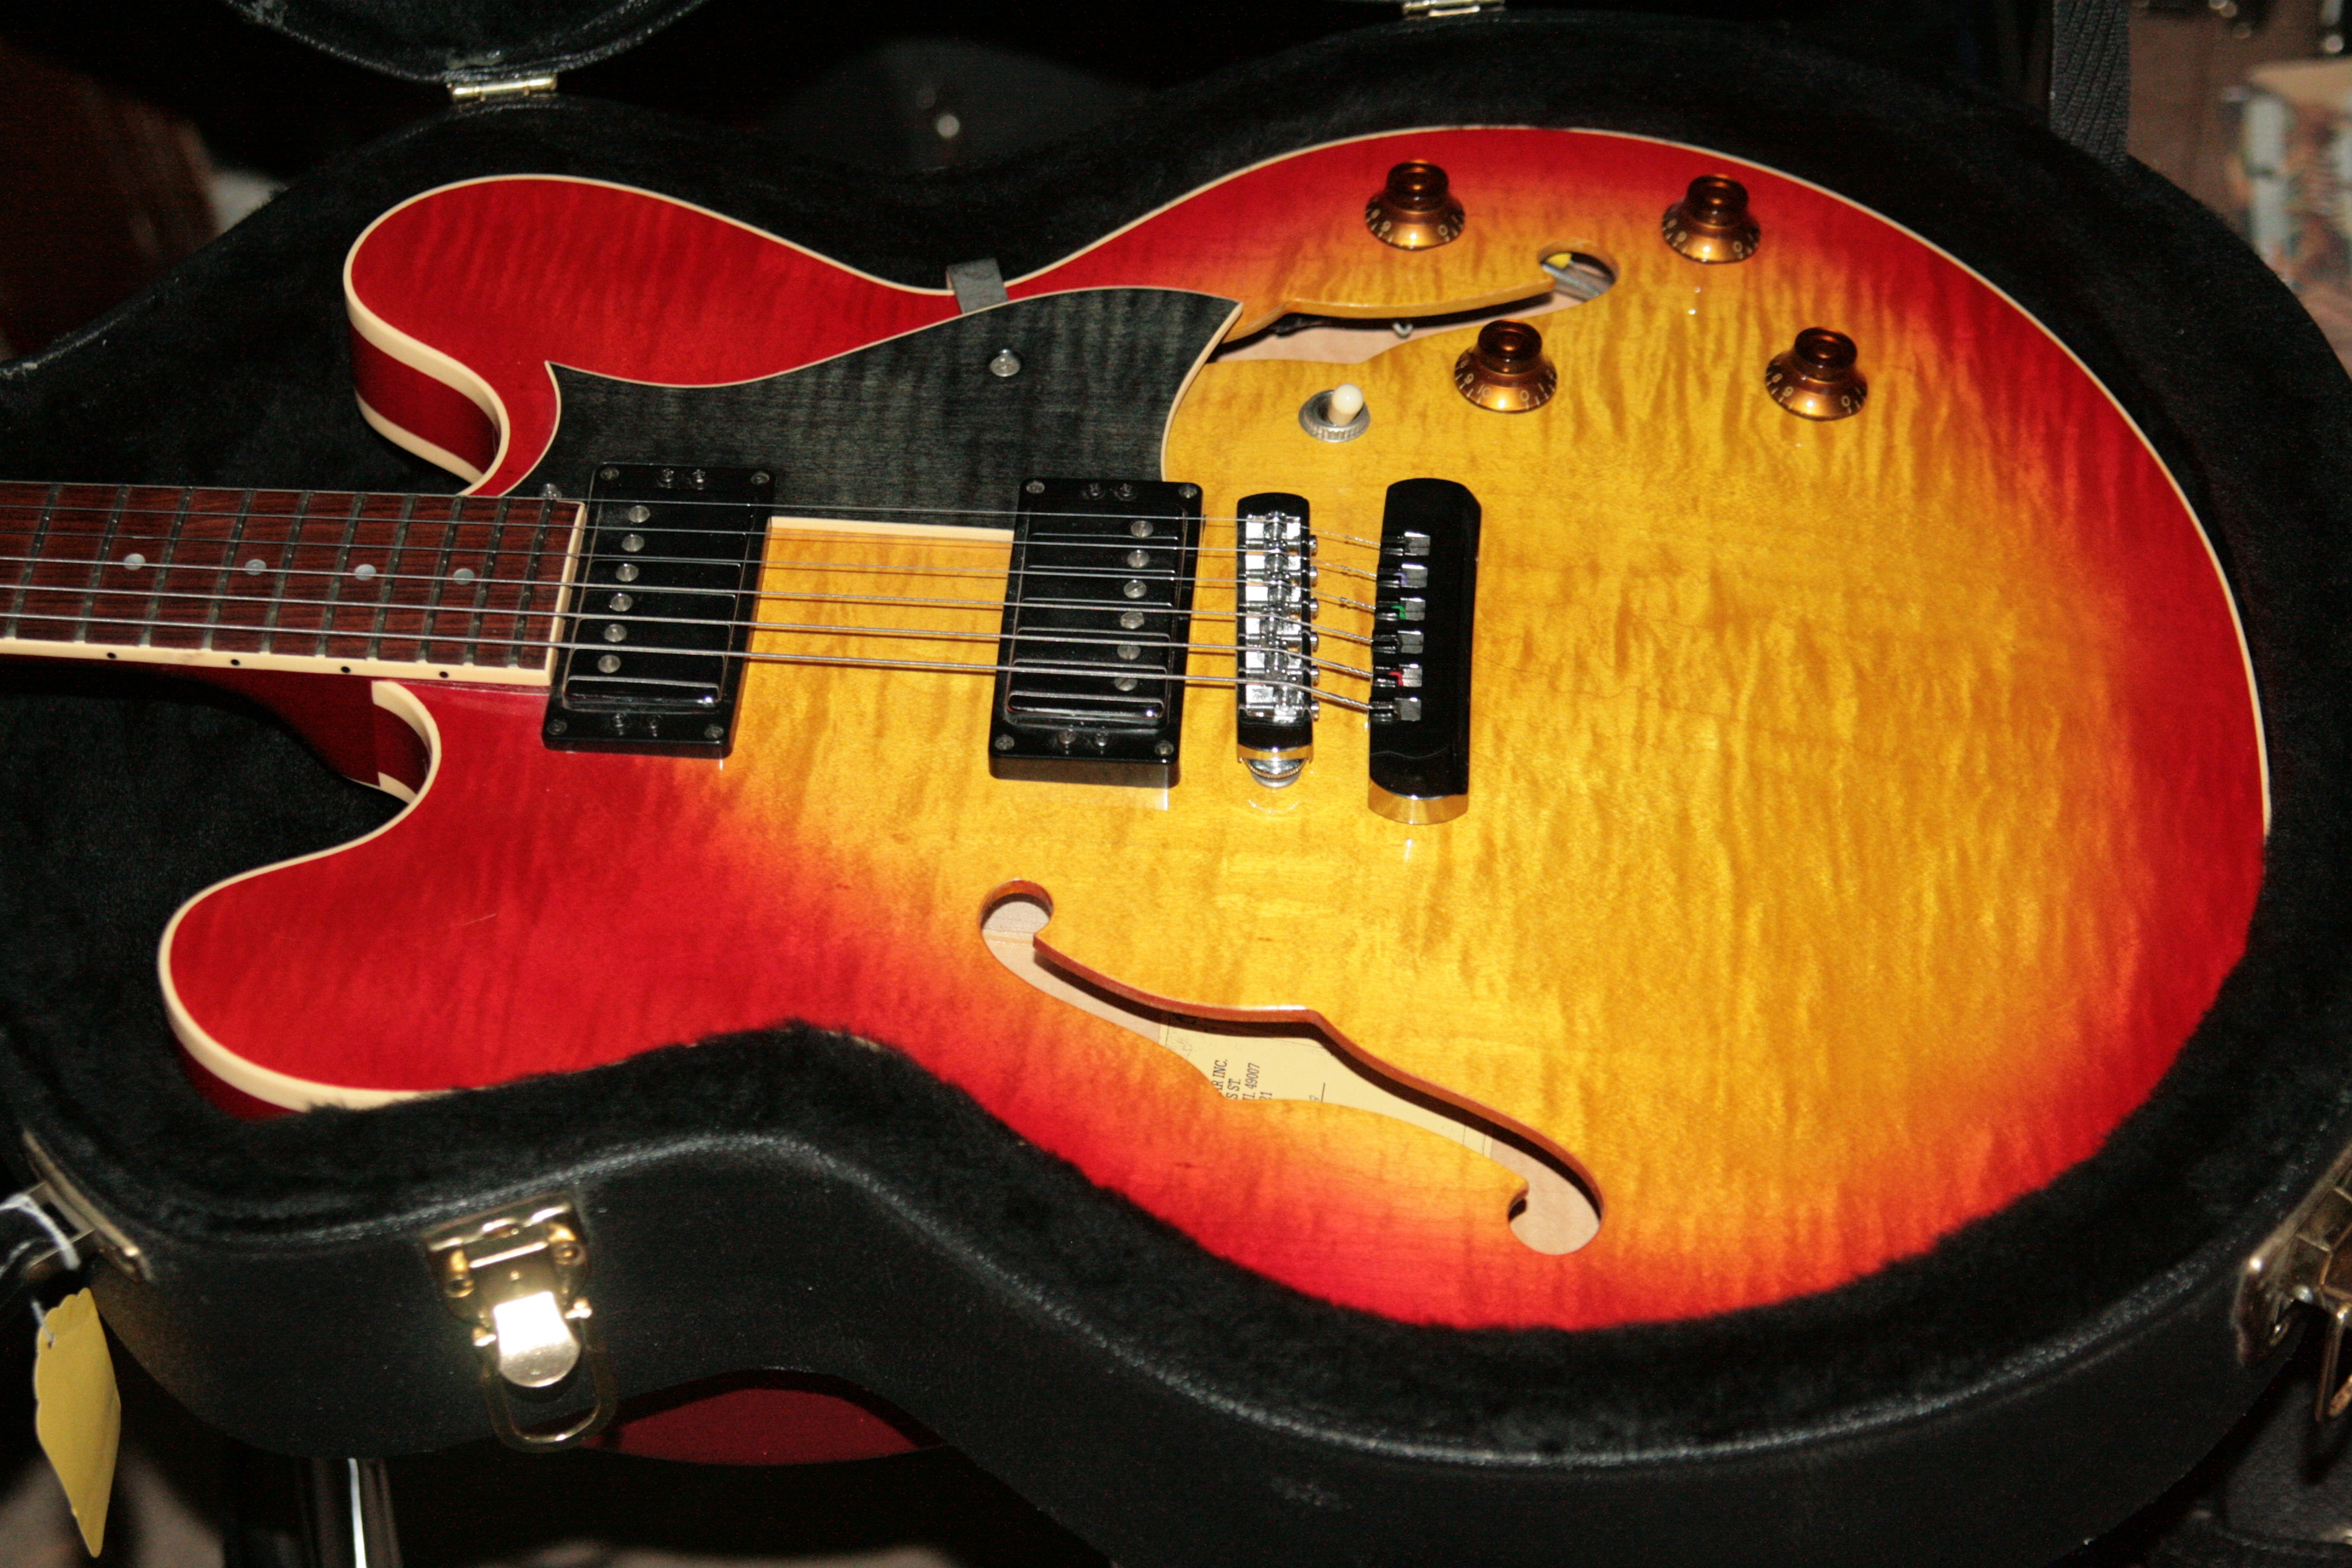 1999 Heritage H-535 Cherry Sunburst Semi-Hollowbody Guitar! Made in USA Kalamazoo Factory!